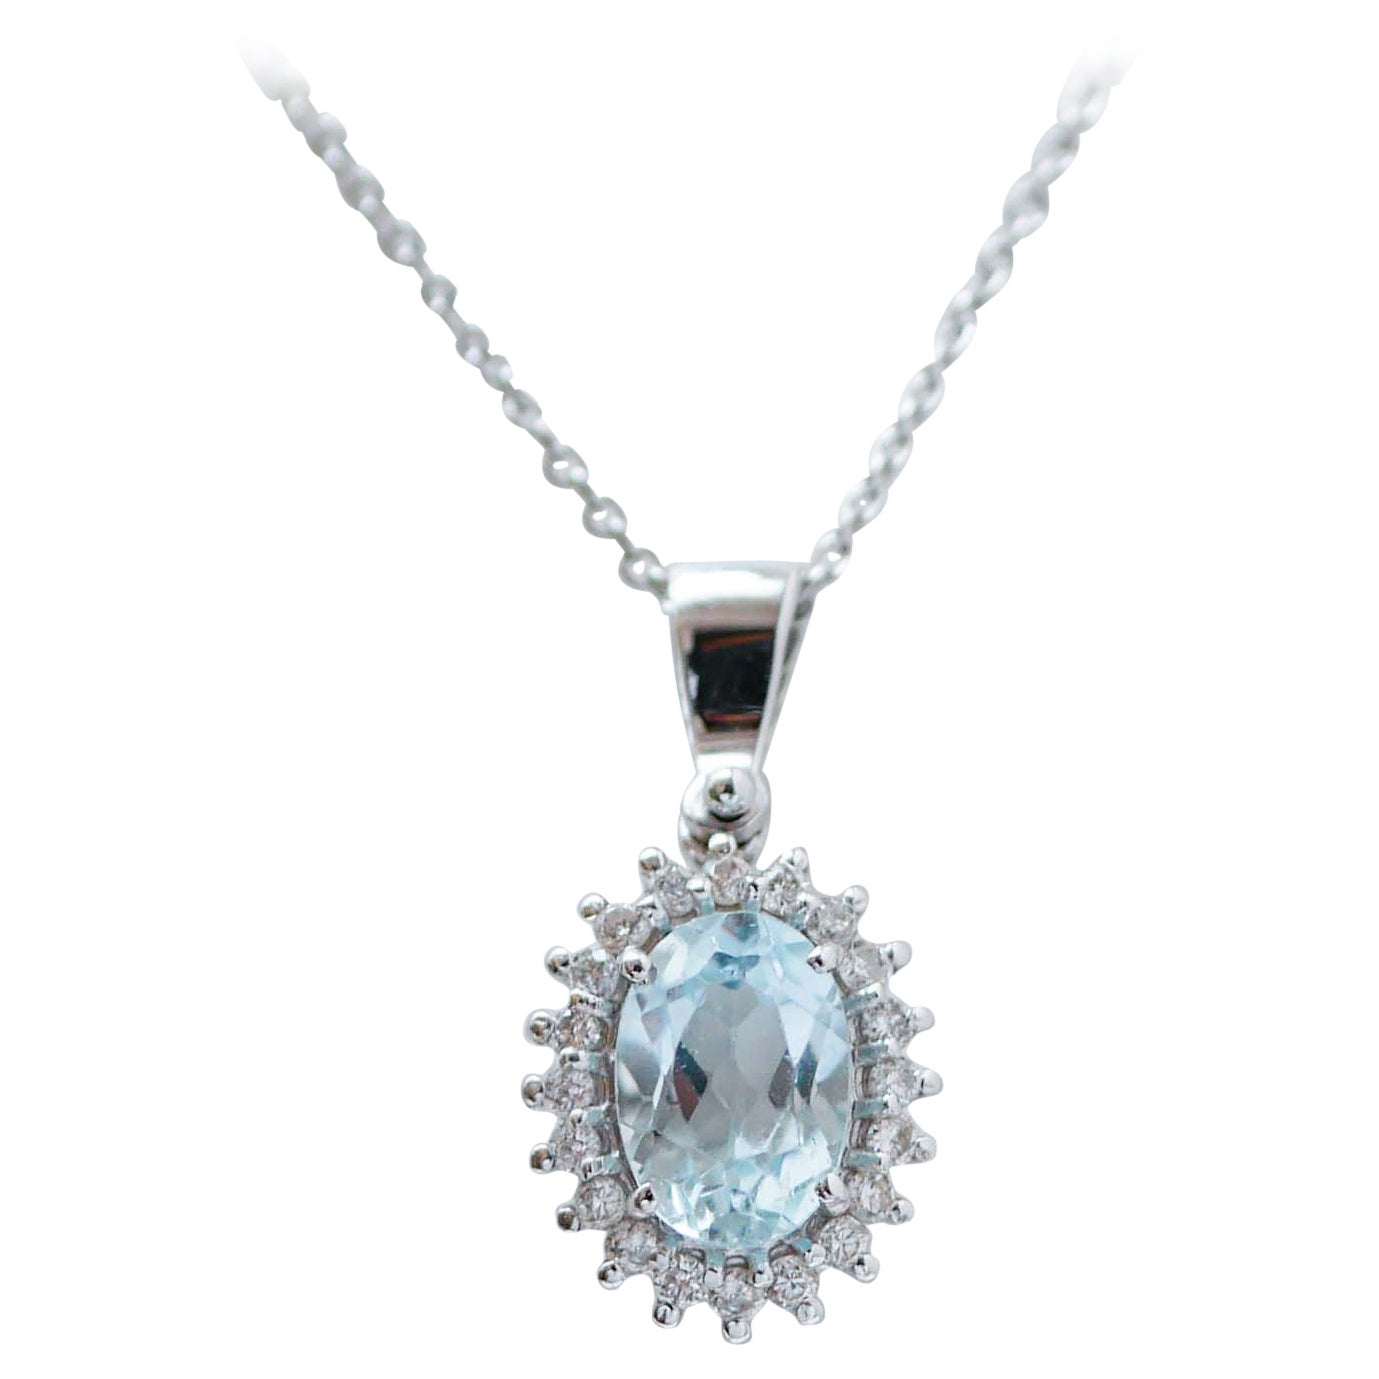 Aquamarine Colour Topaz, Diamonds, 18 Karat White Gold Pendant Necklace. For Sale